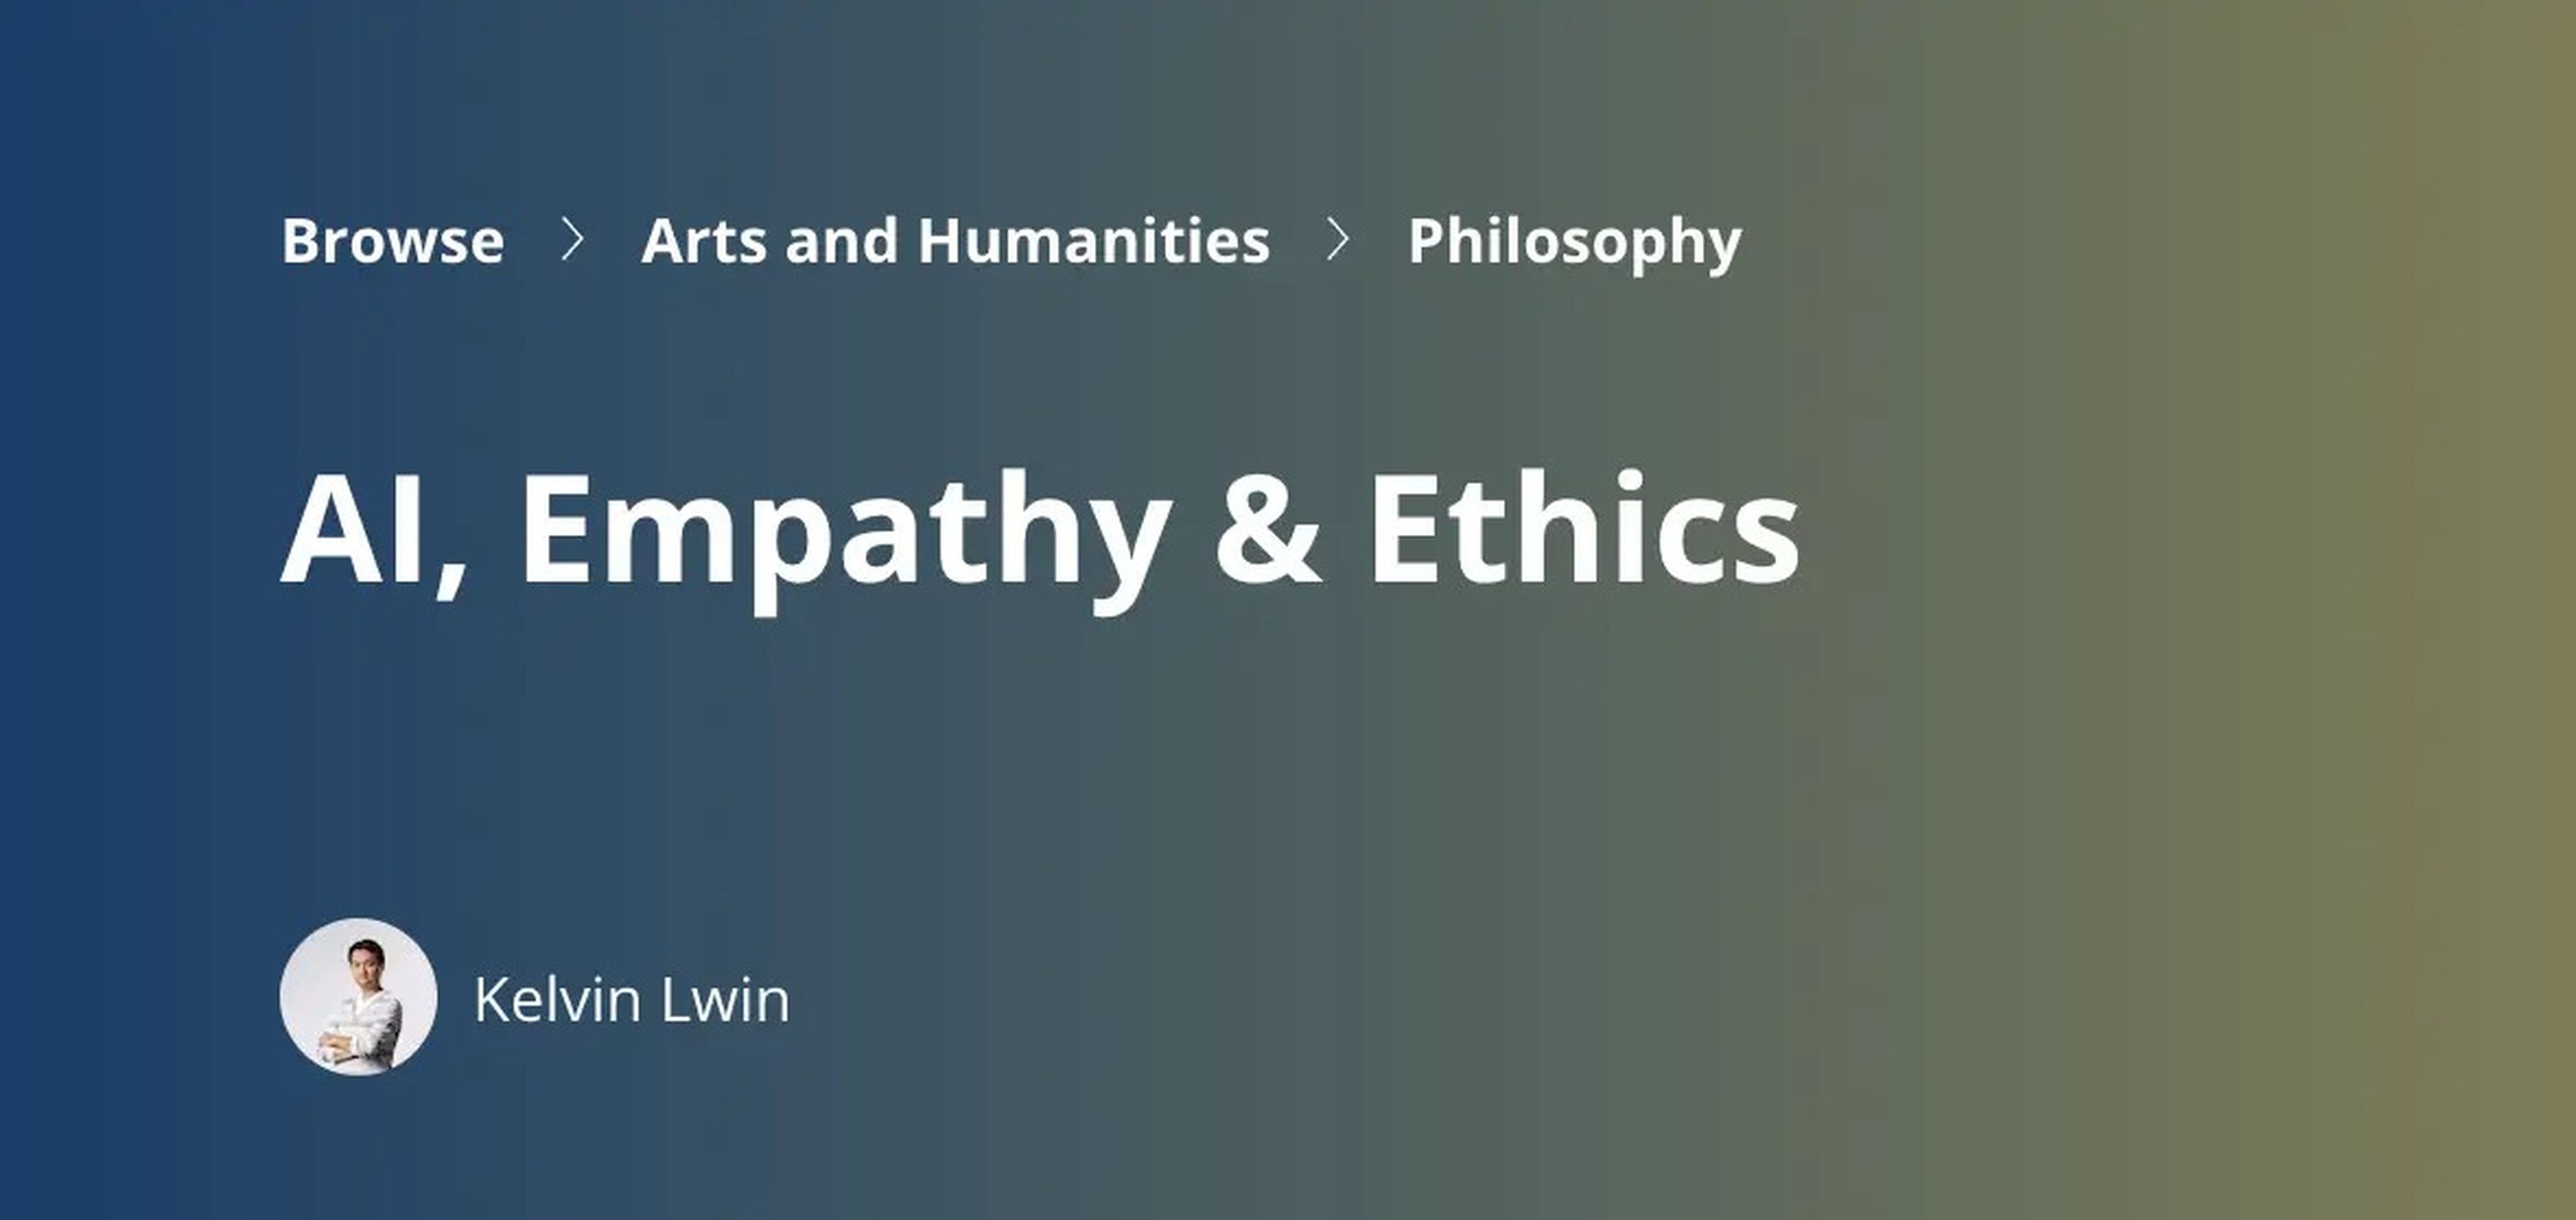 AI, Empathy & Ethics Coursera course